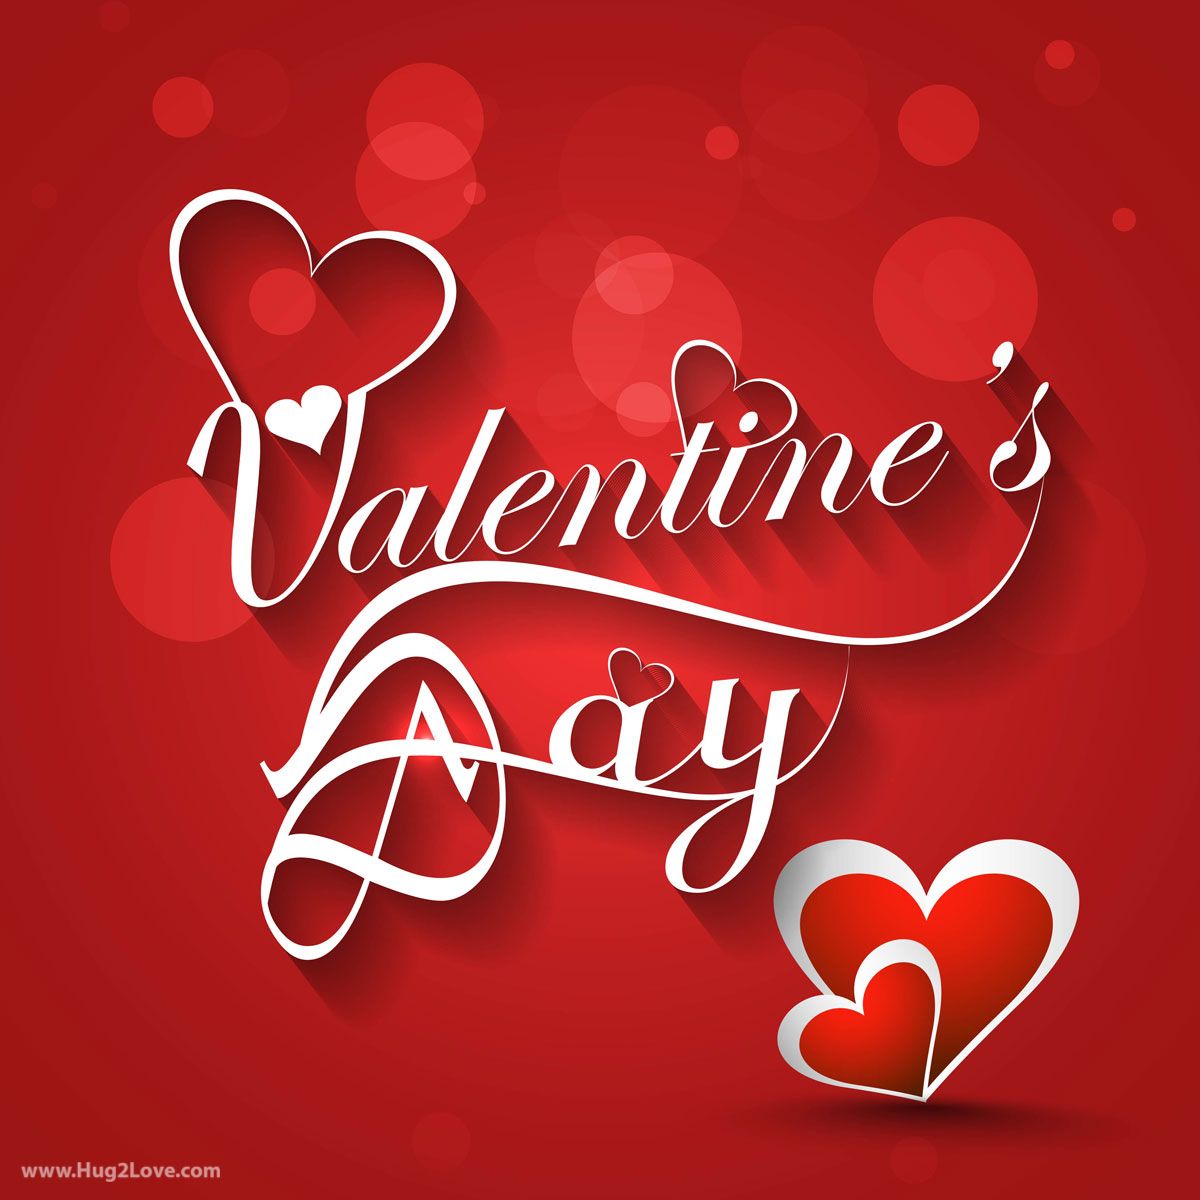 Happy Valentine's Day Image & Wallpaper 2016. Happy valentines day image, Happy valentine day quotes, Happy valentines day